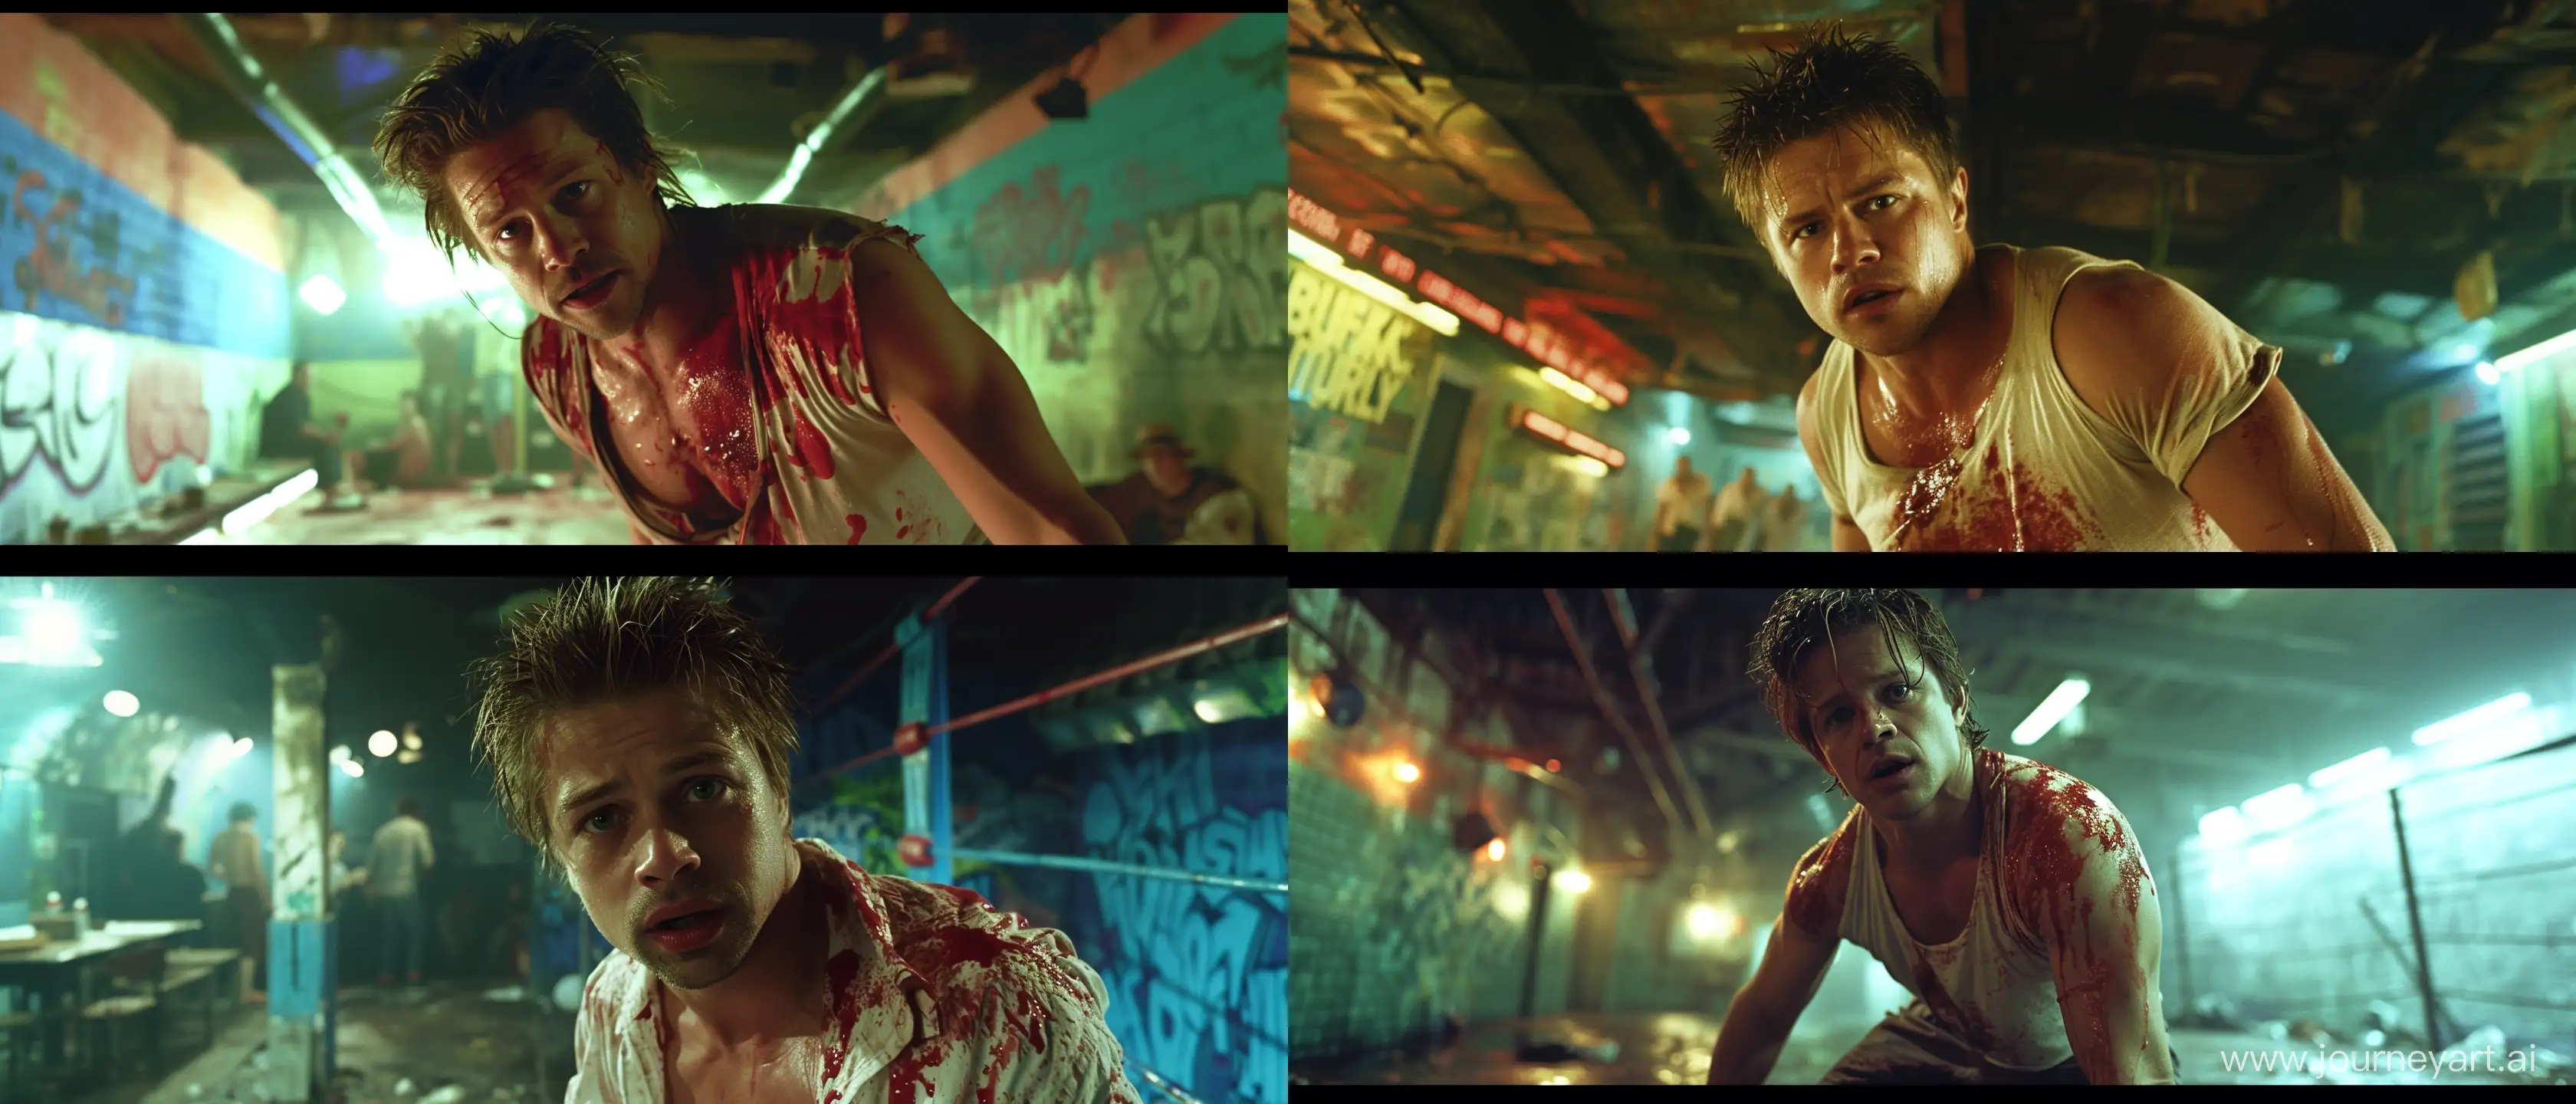 Intense-Brad-Pitt-Fight-Club-Scene-BloodStained-Warrior-Ready-for-Combat